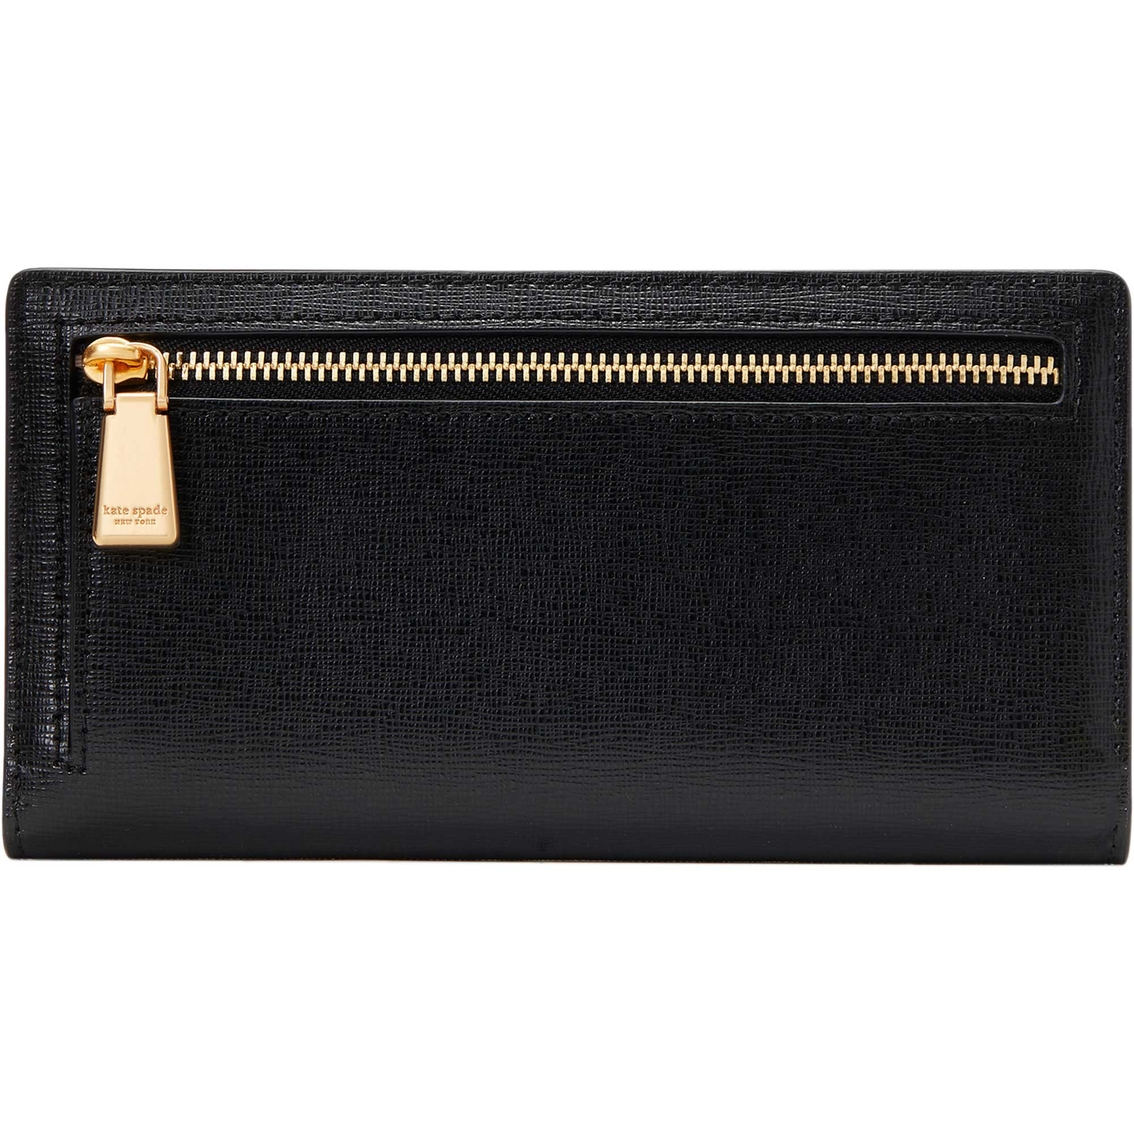 Kate Spade New York Morgan Saffiano Leather Slim Bifold Wallet ...